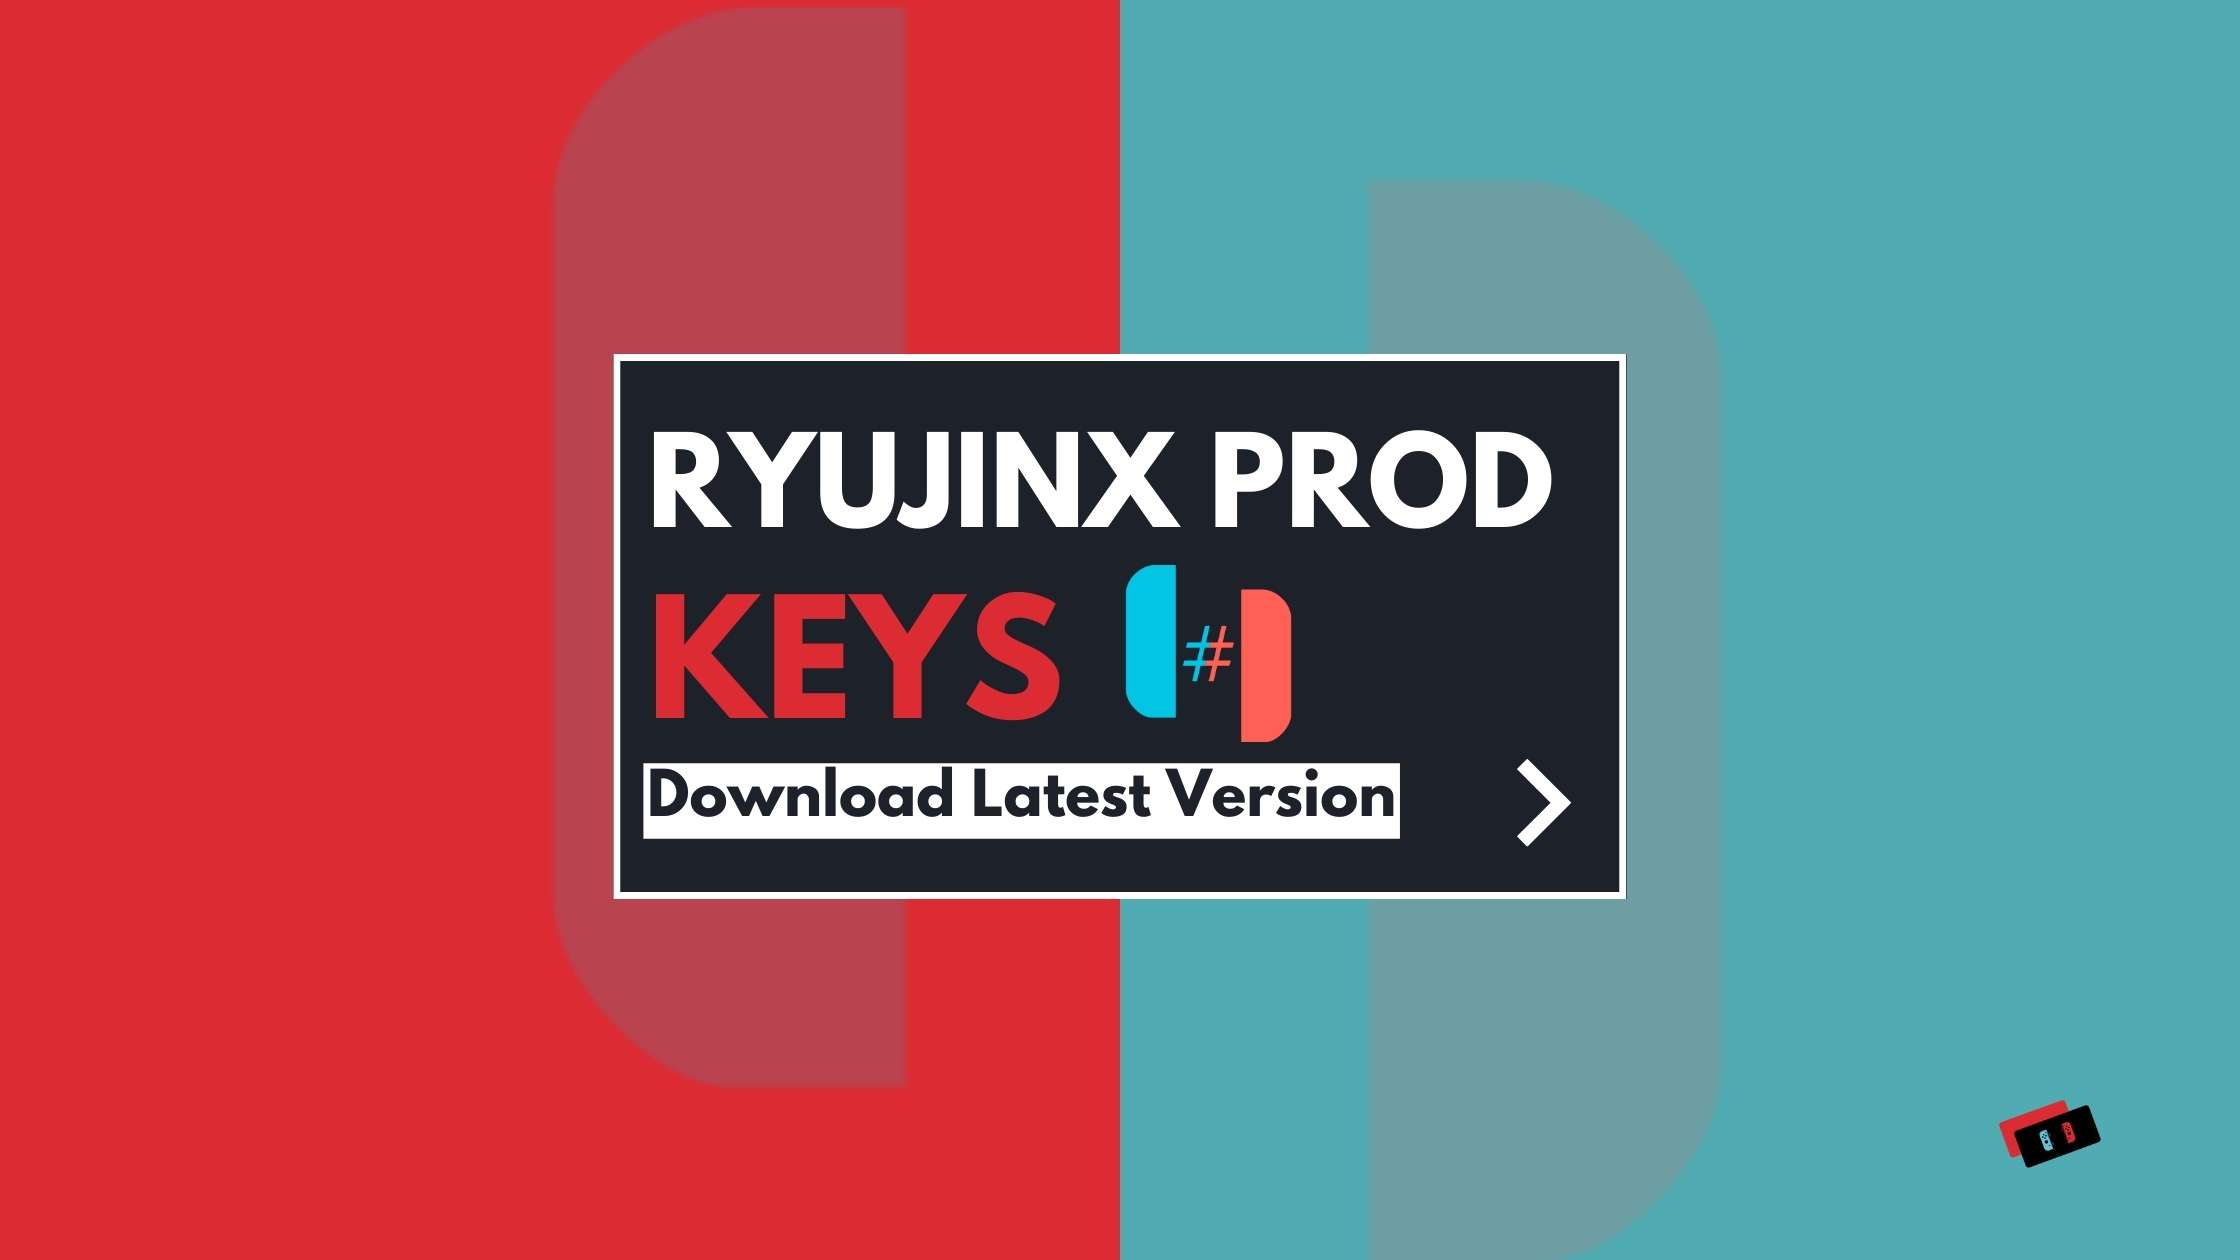 Prod Keys For Ryujinx